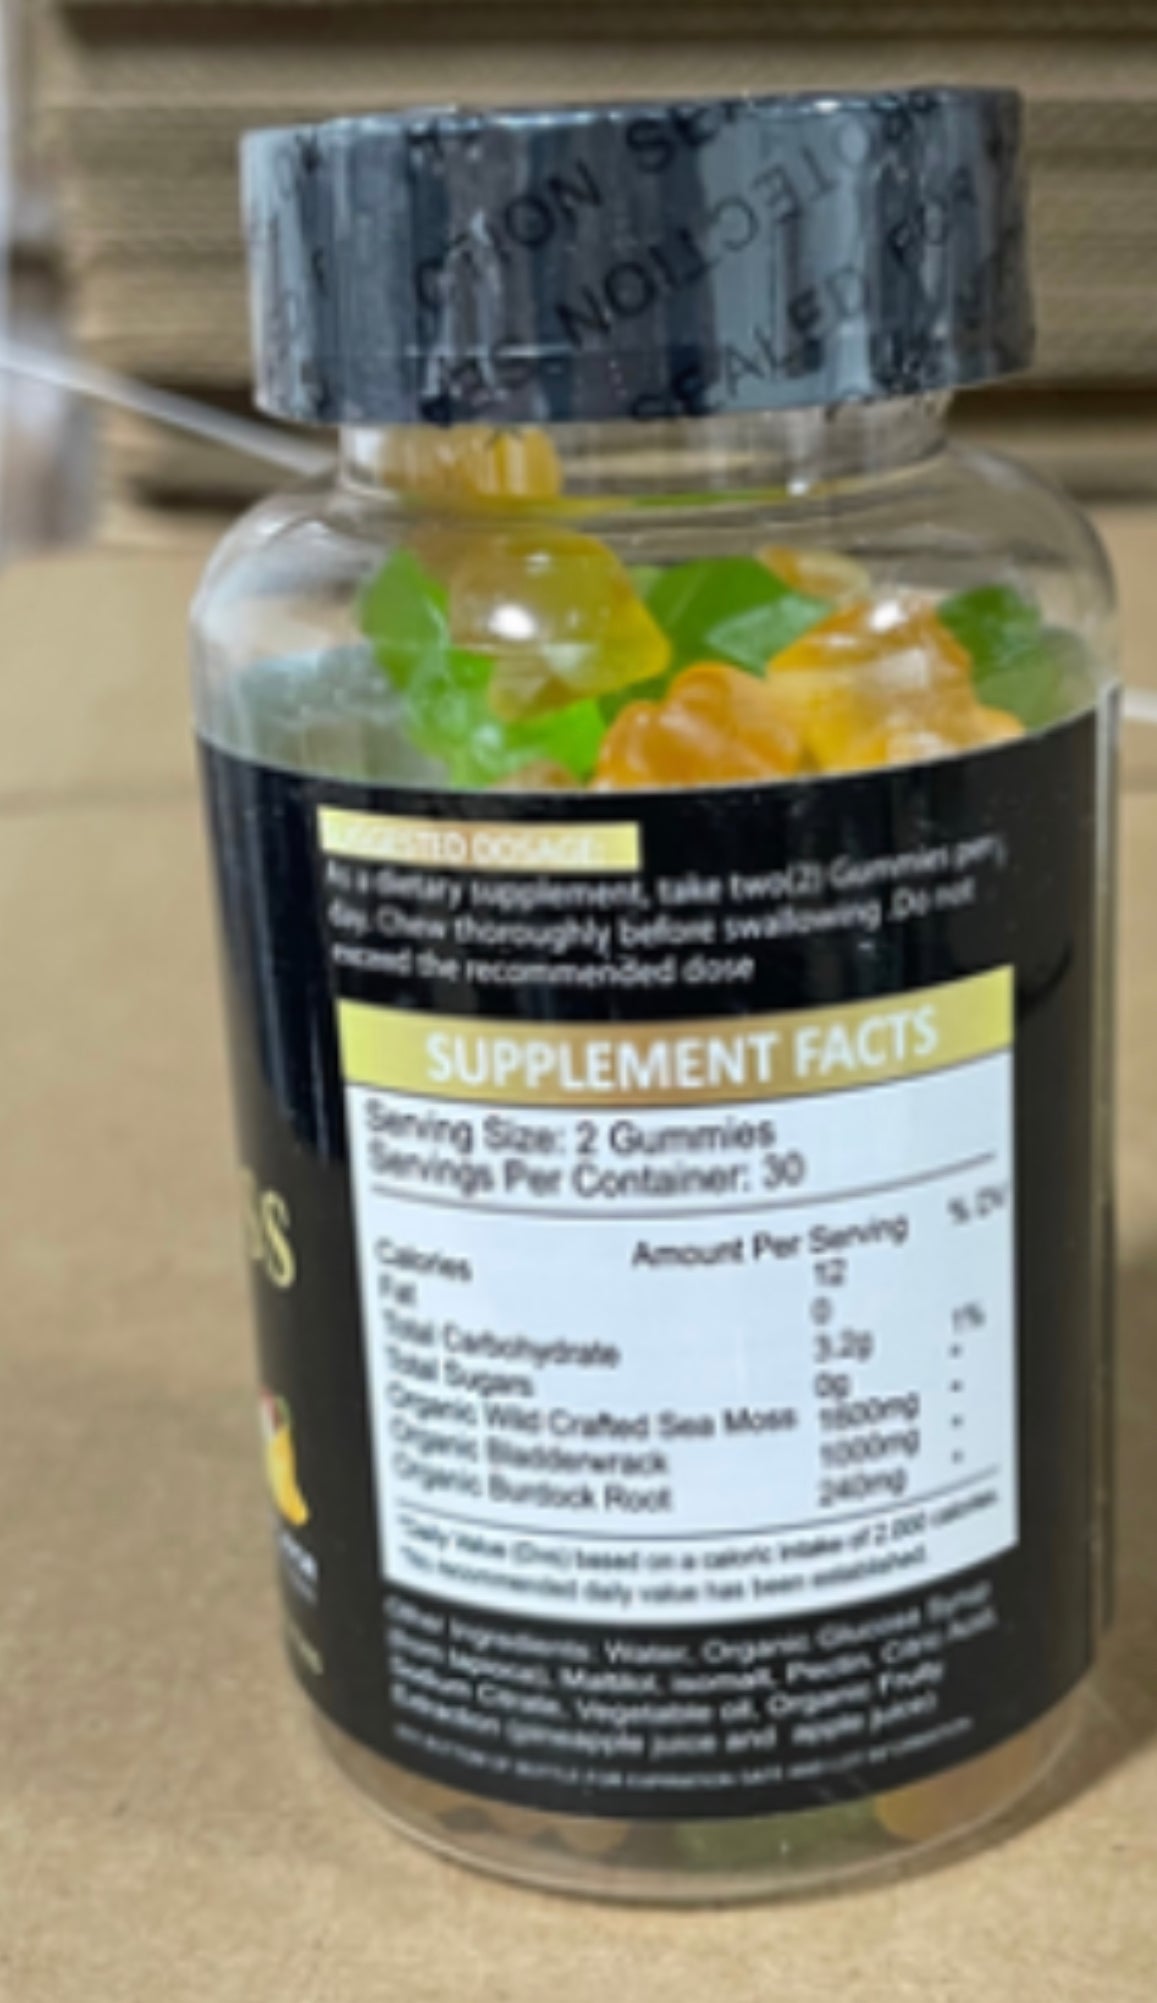 BULK Sea Moss Gummies!!!  Apple pineapple 0 grams sugar